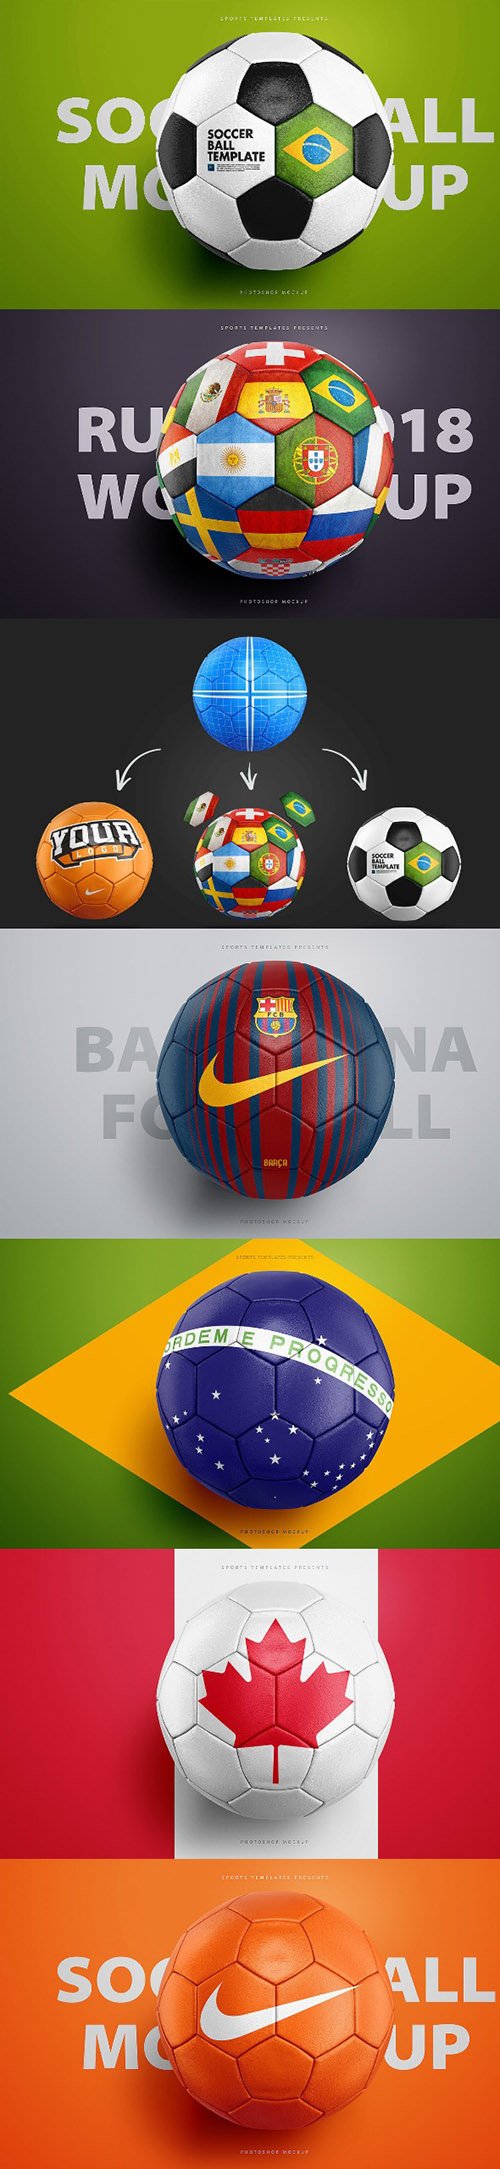 Football / Soccer Ball Photoshop Mockup PSD